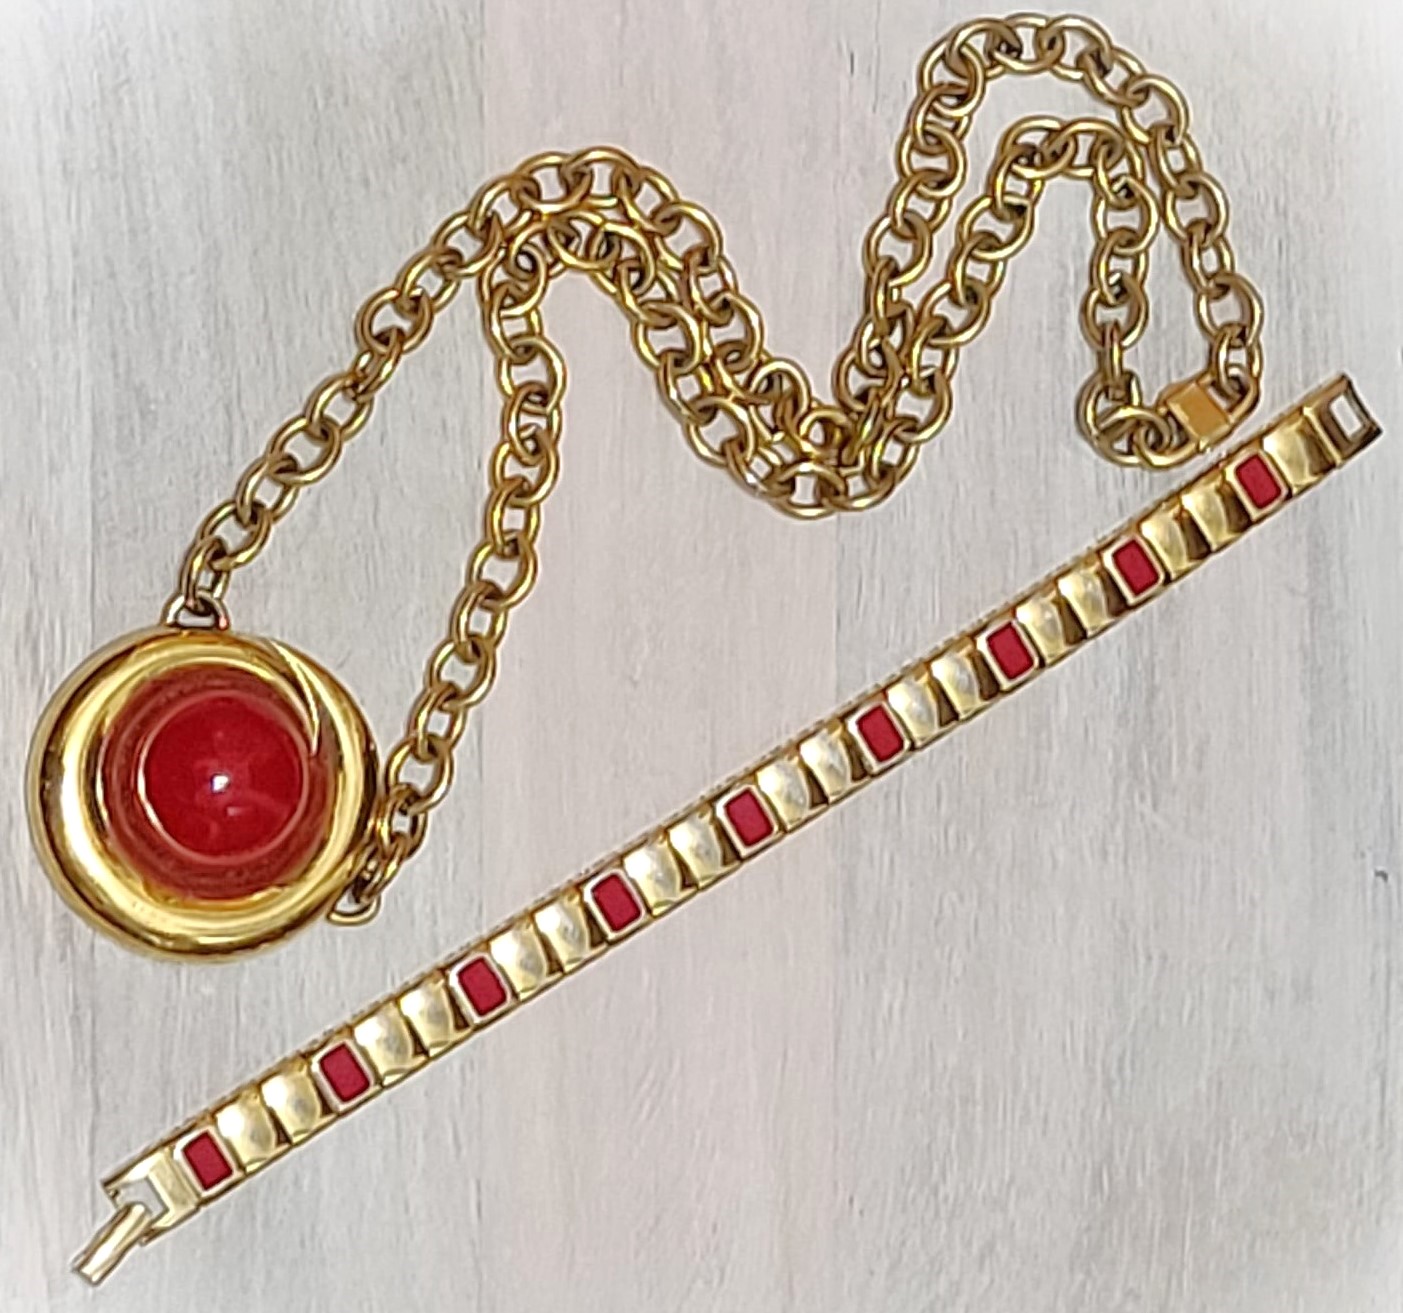 Monet vintage red pendant style necklace and link bracelet set